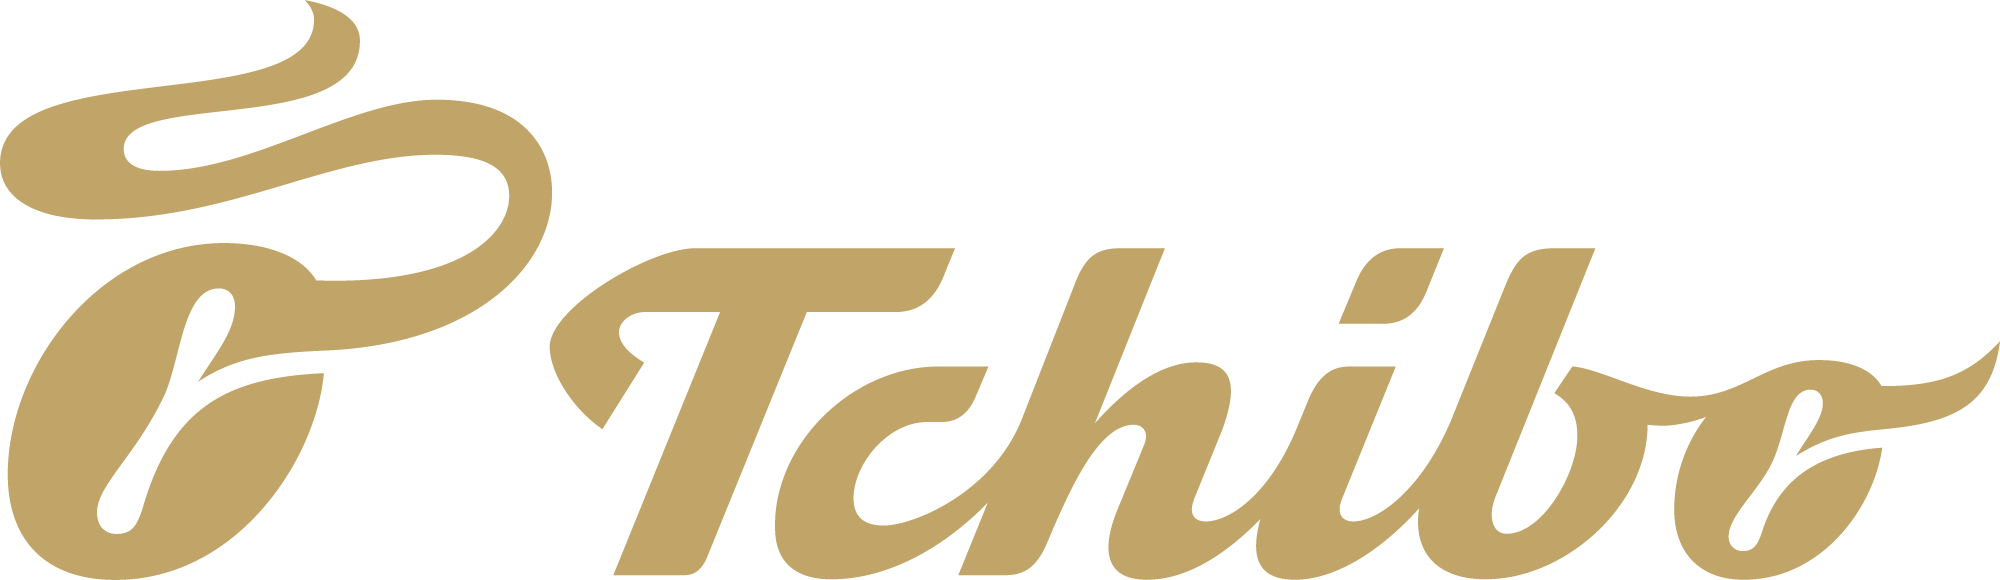 Logo Tchibo